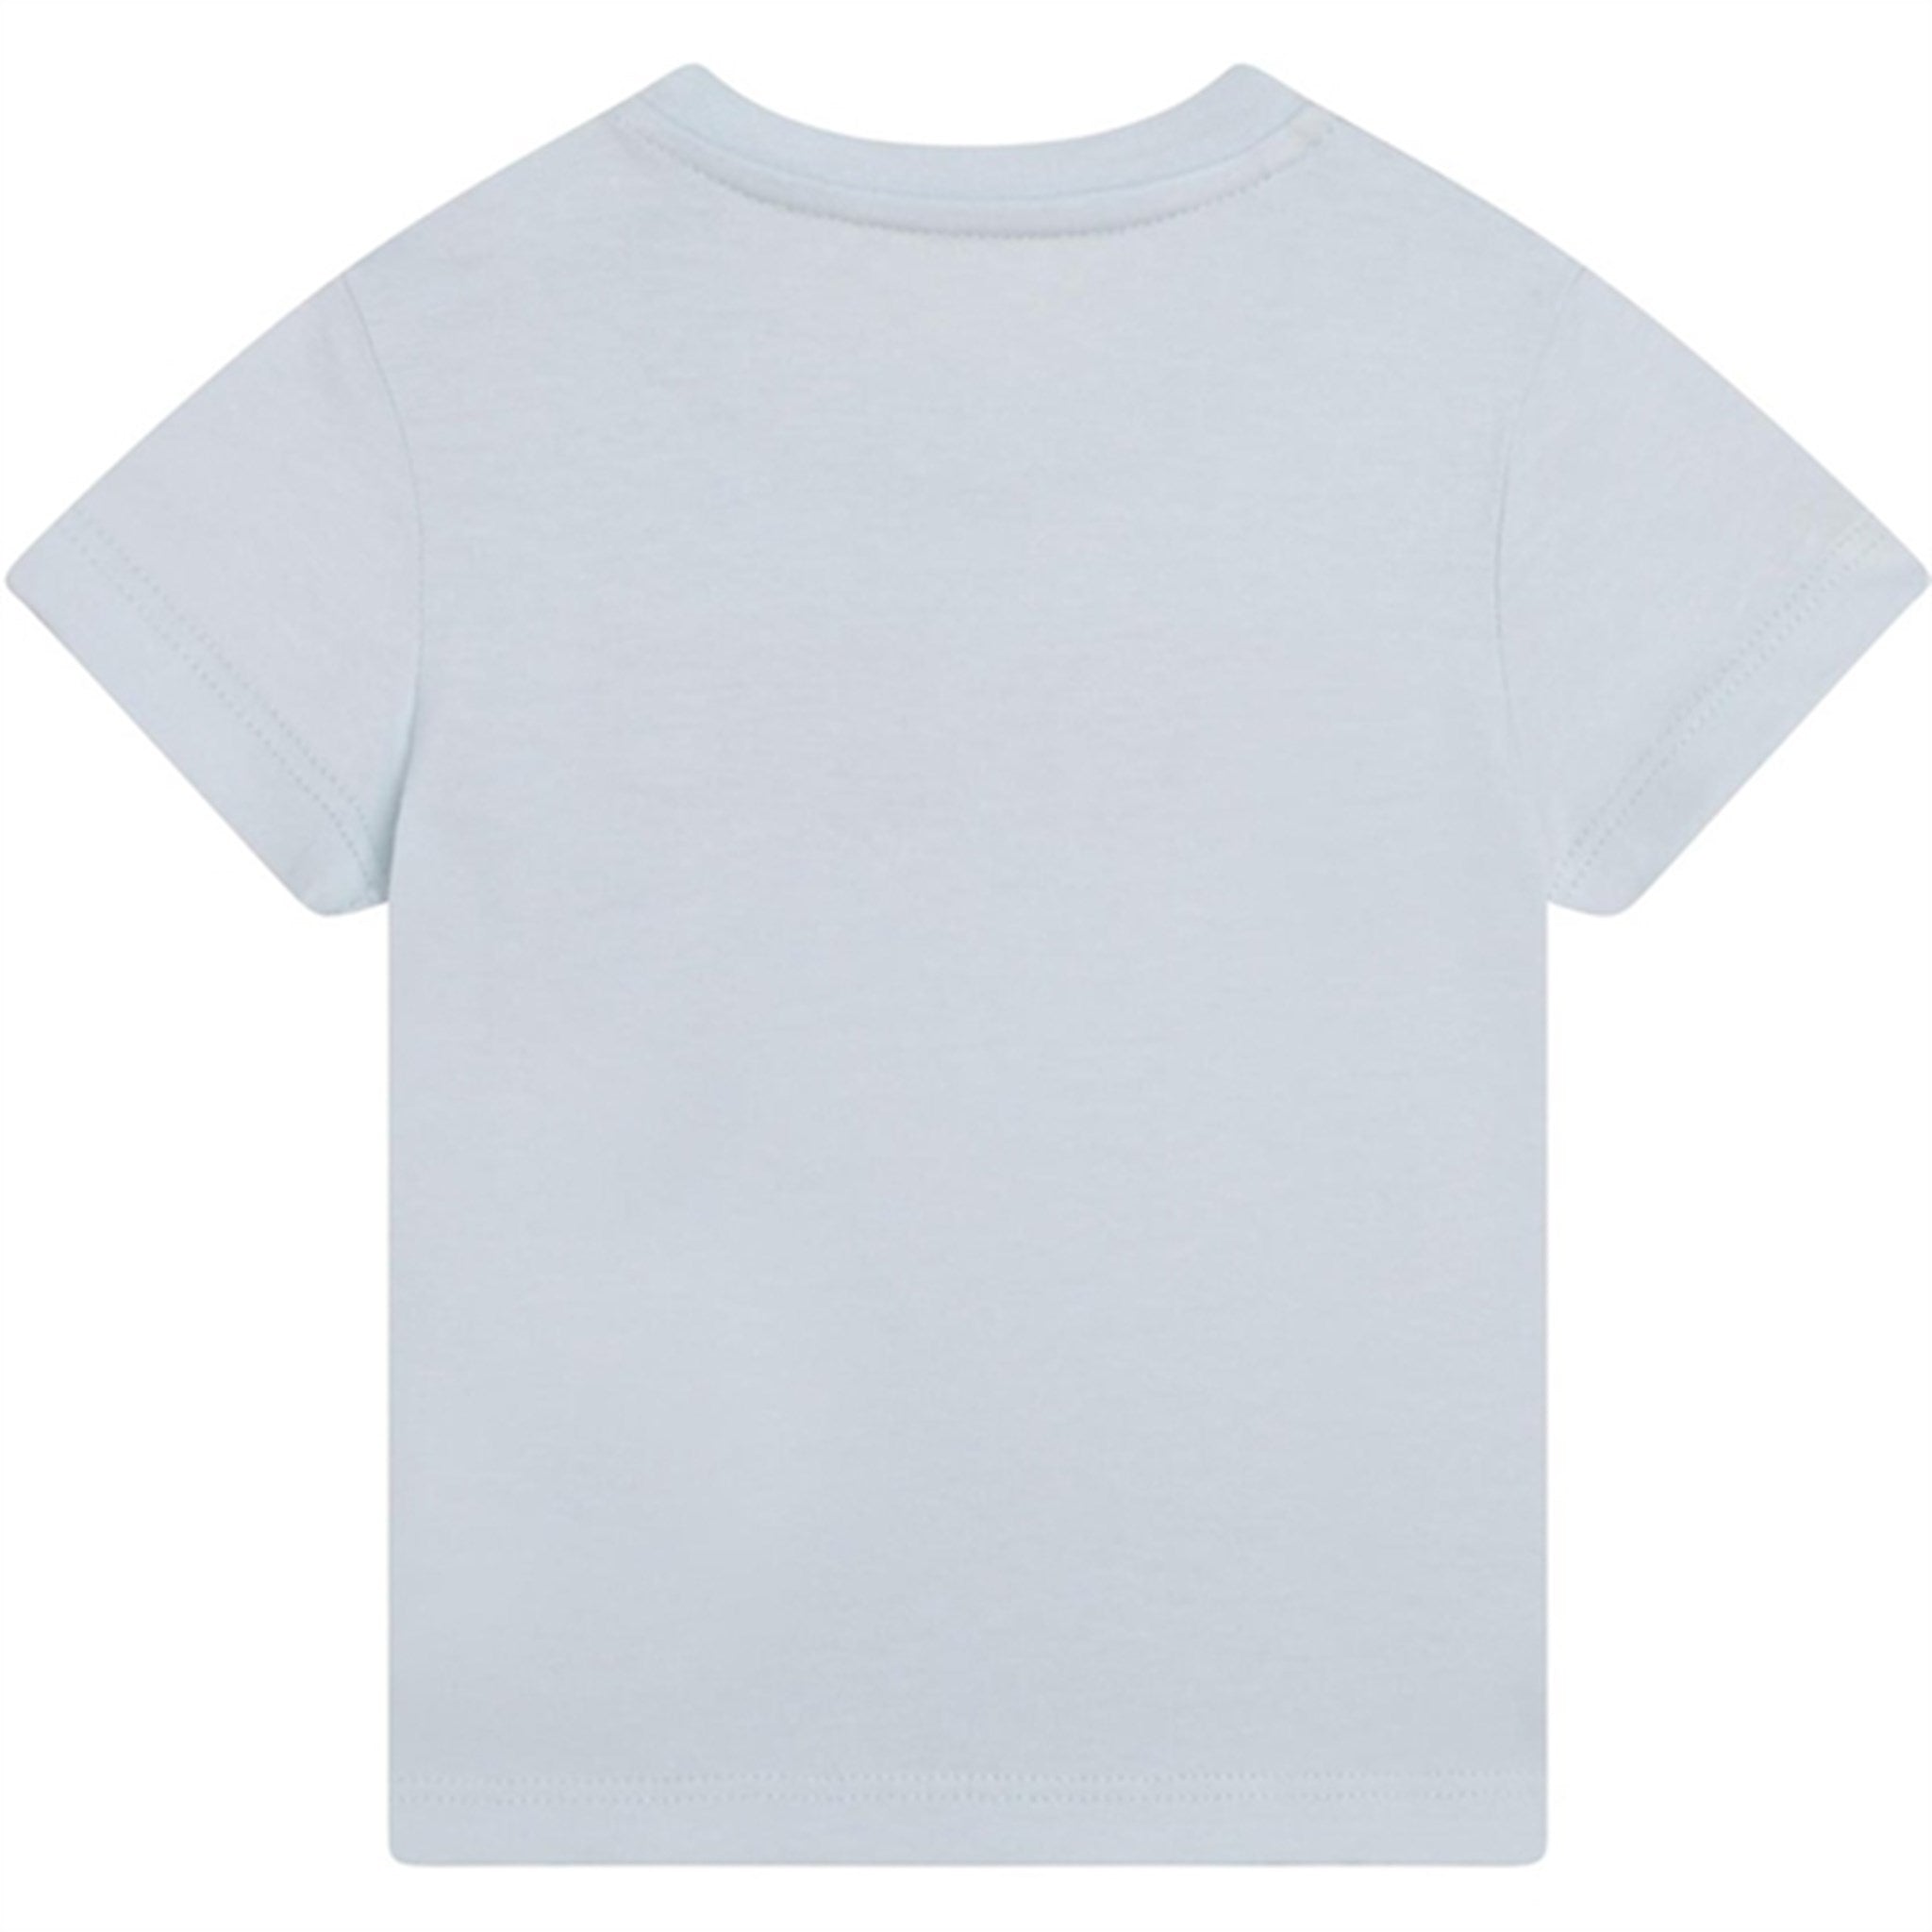 Kenzo Baby T-shirt Pale Blue 2